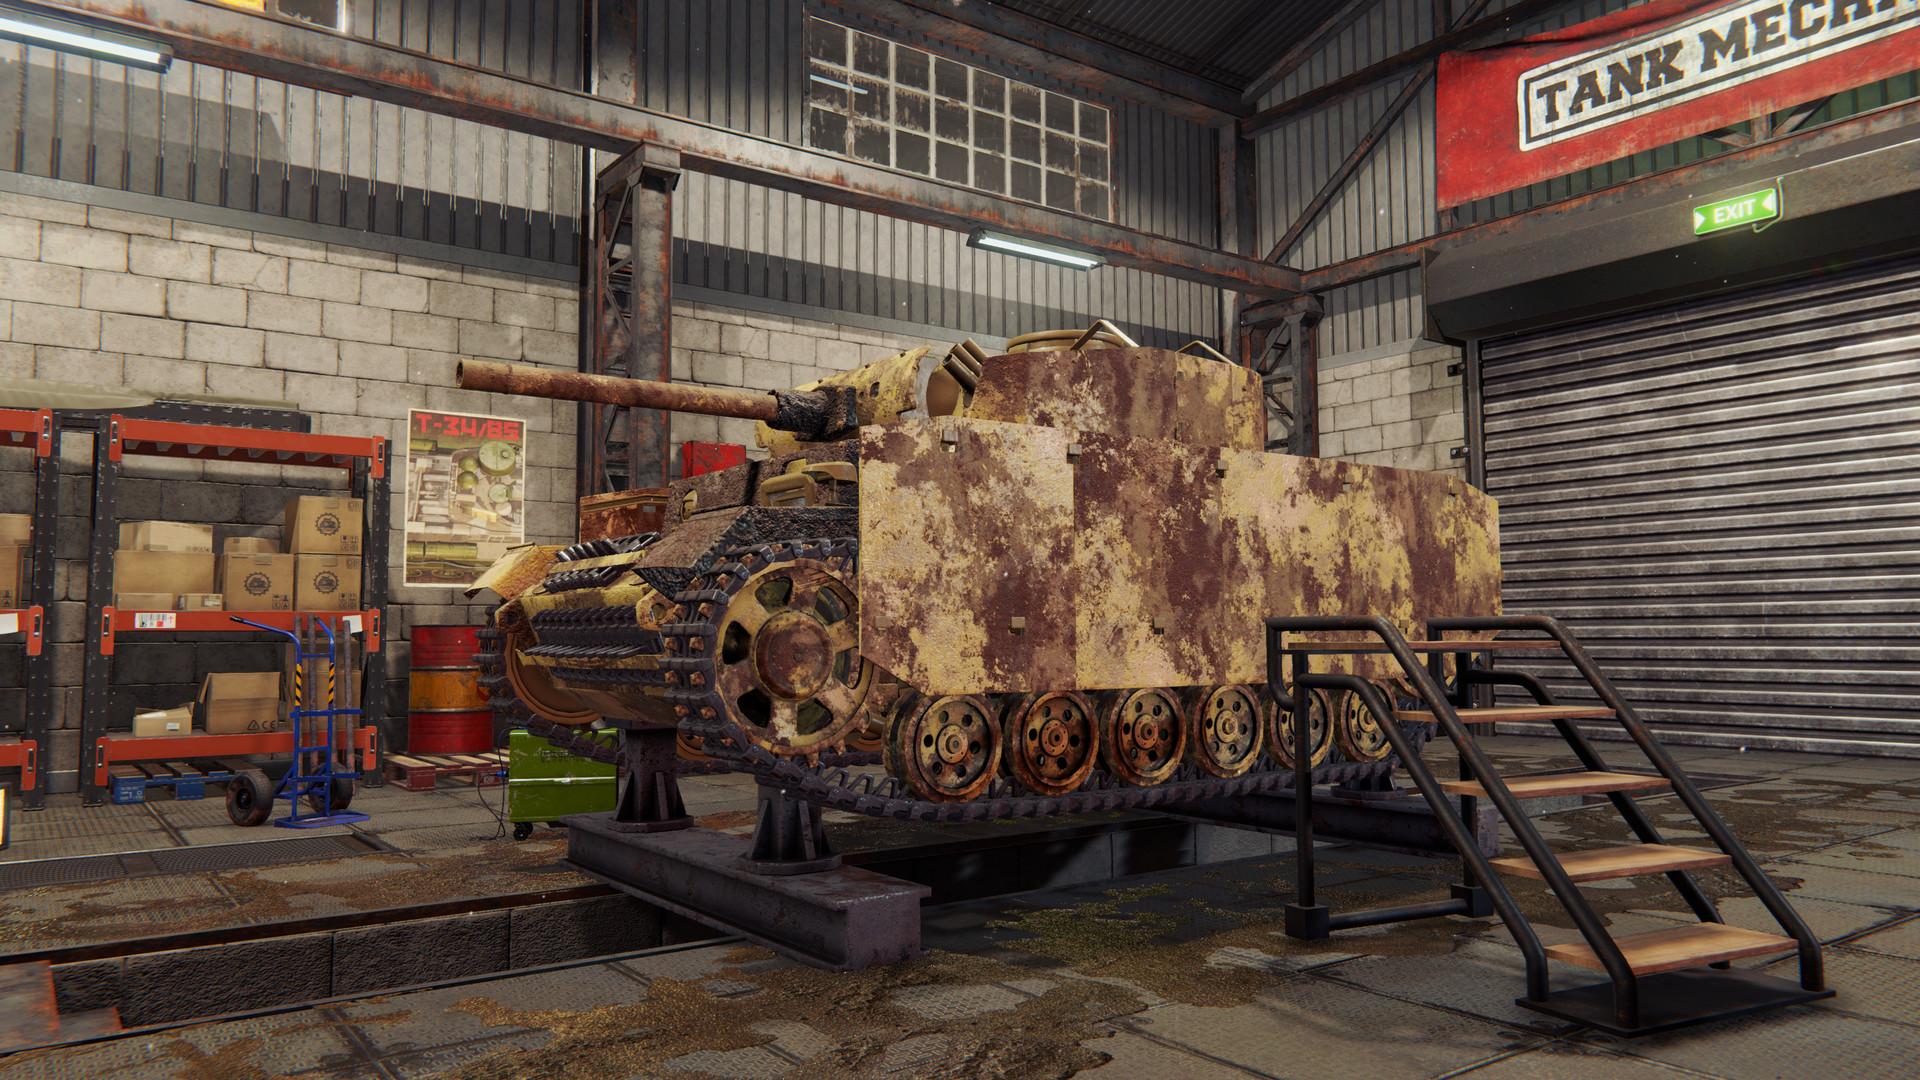 Screenshot №3 from game Tank Mechanic Simulator